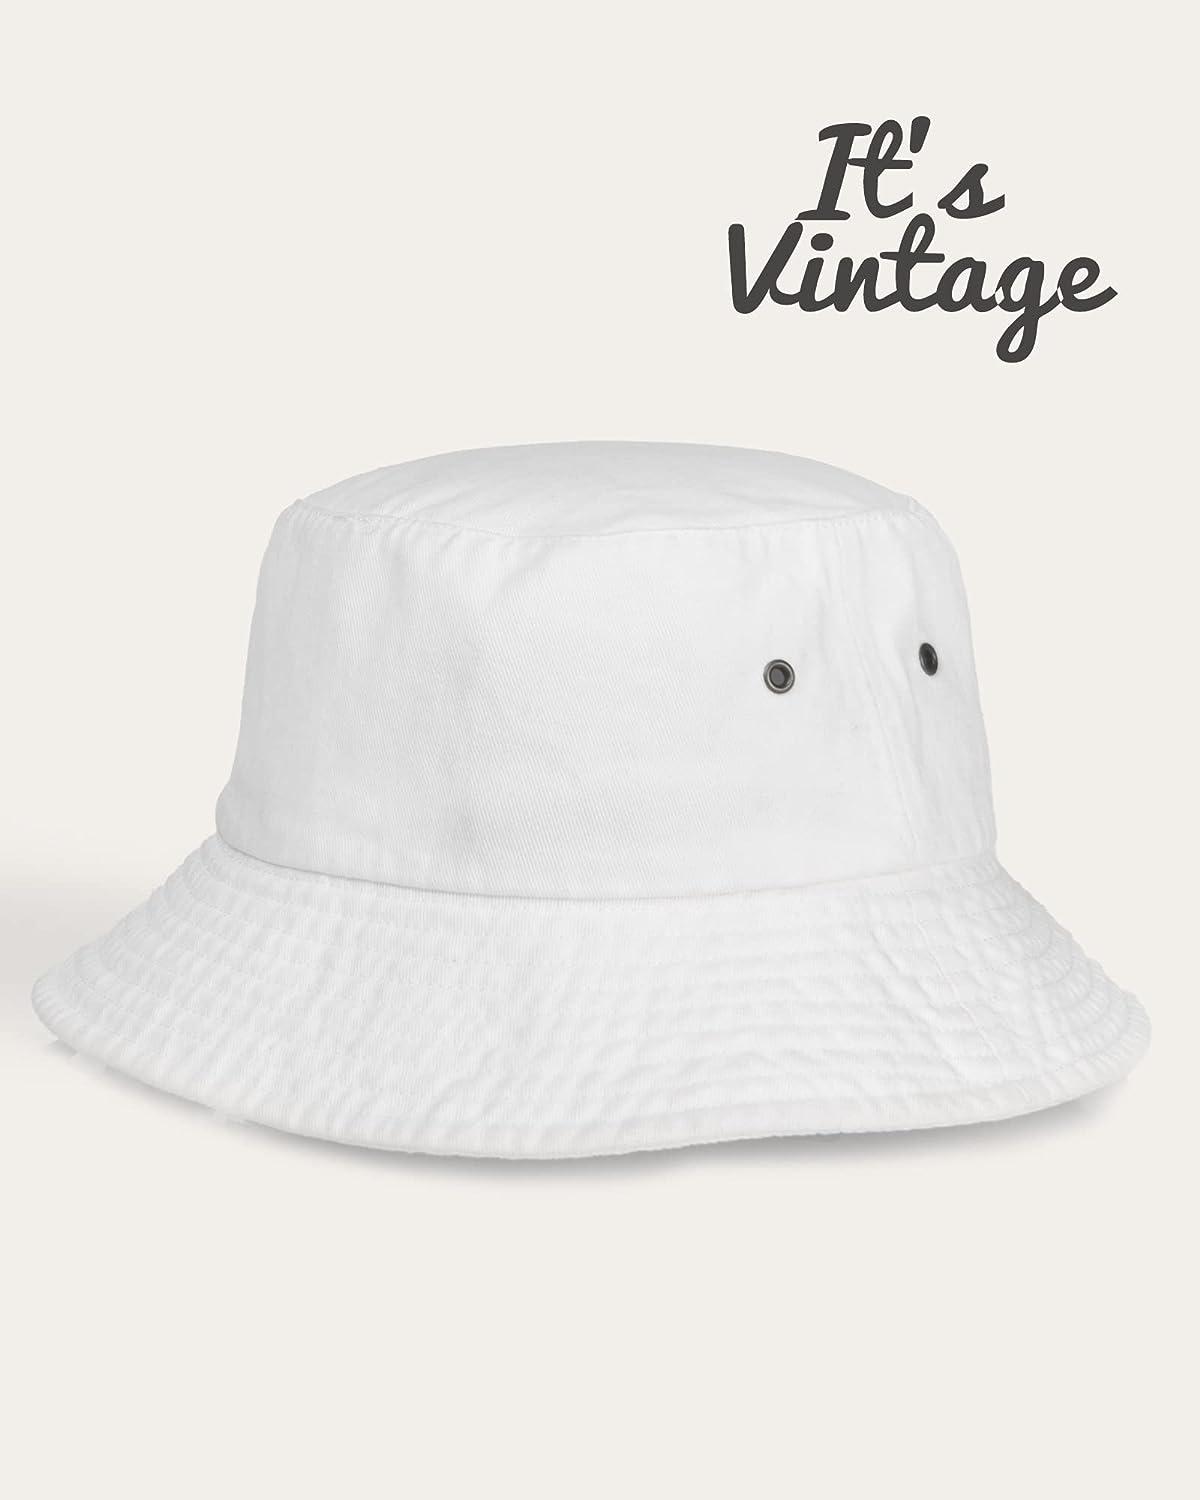 Womens Fishing Hats, Sun Hat, Beach Hat, Fisherman Hat, Summer Hat